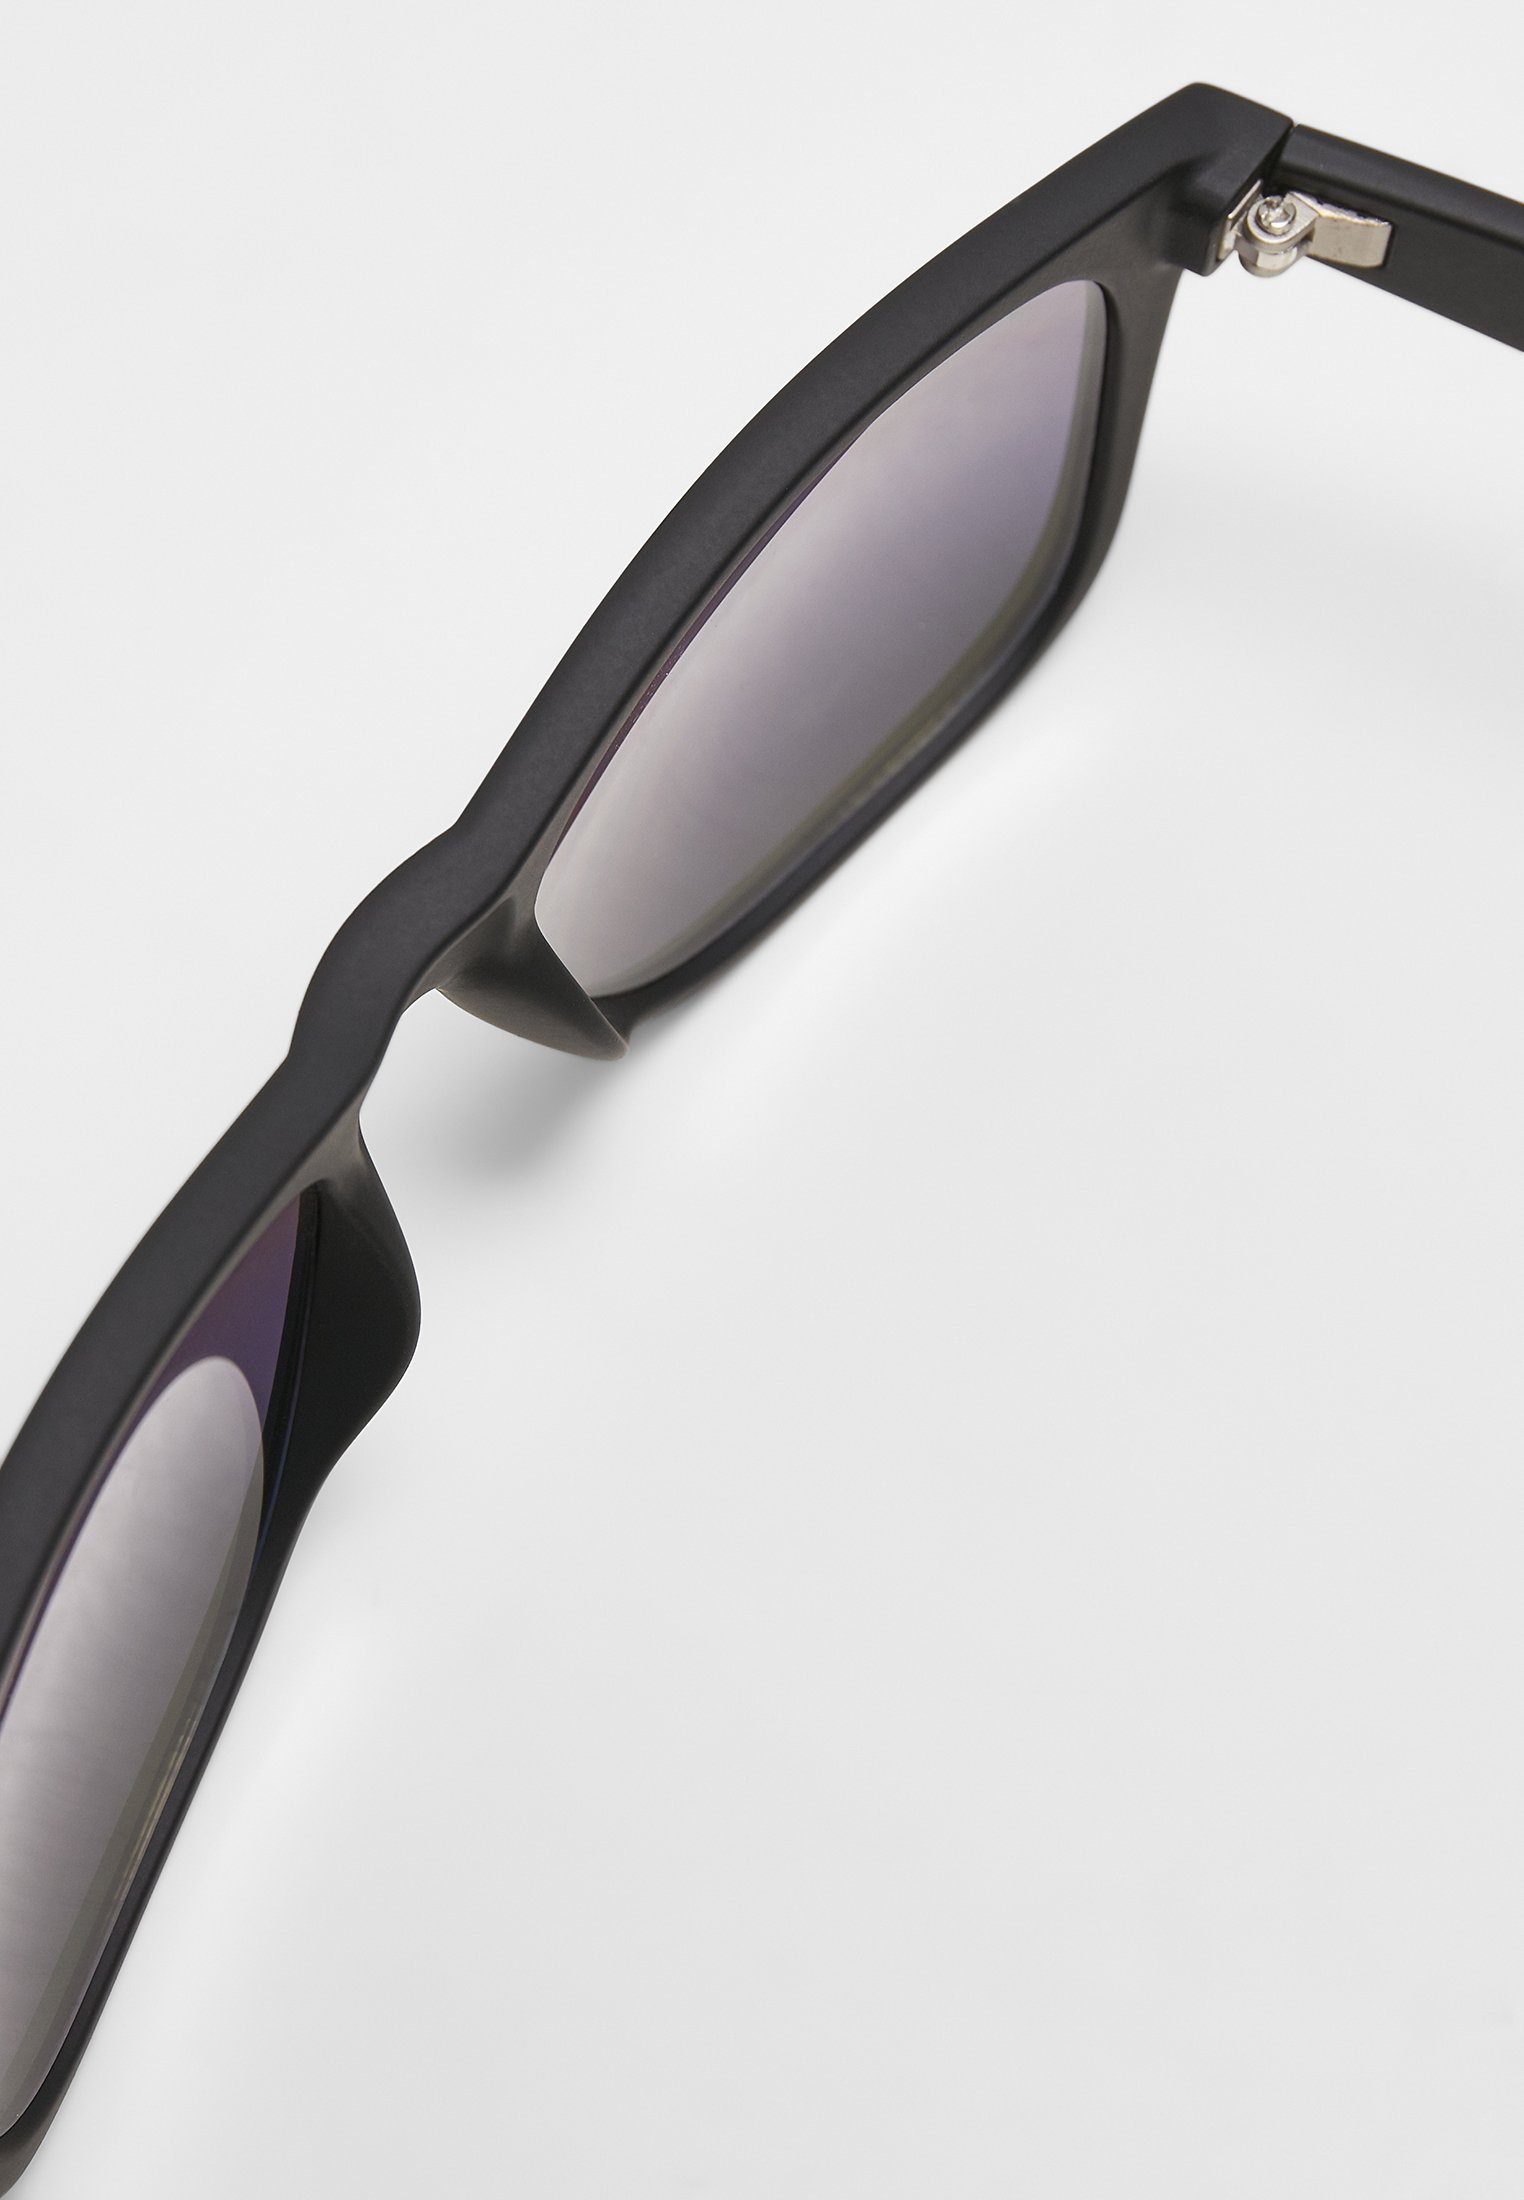 CLASSICS Mirror Likoma black/purple Sunglasses UC Sonnenbrille Accessoires URBAN